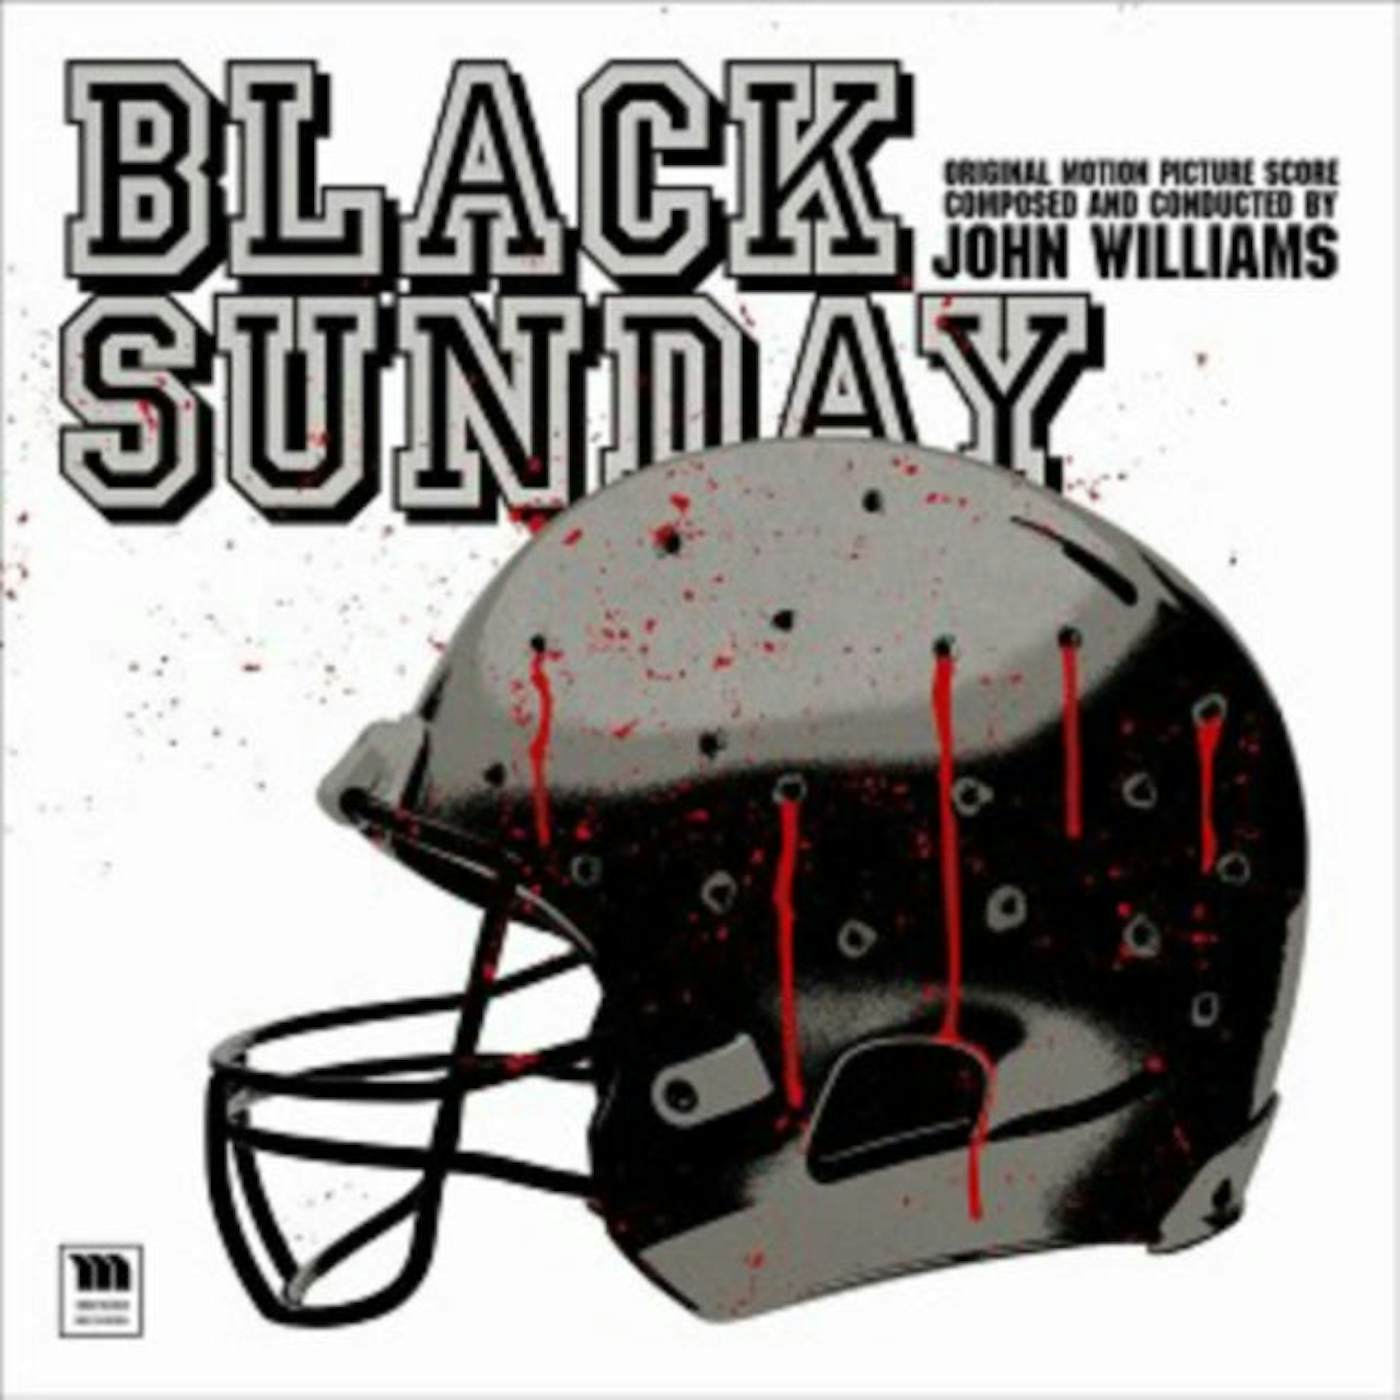 John Williams LP Vinyl Record - Black Sunday